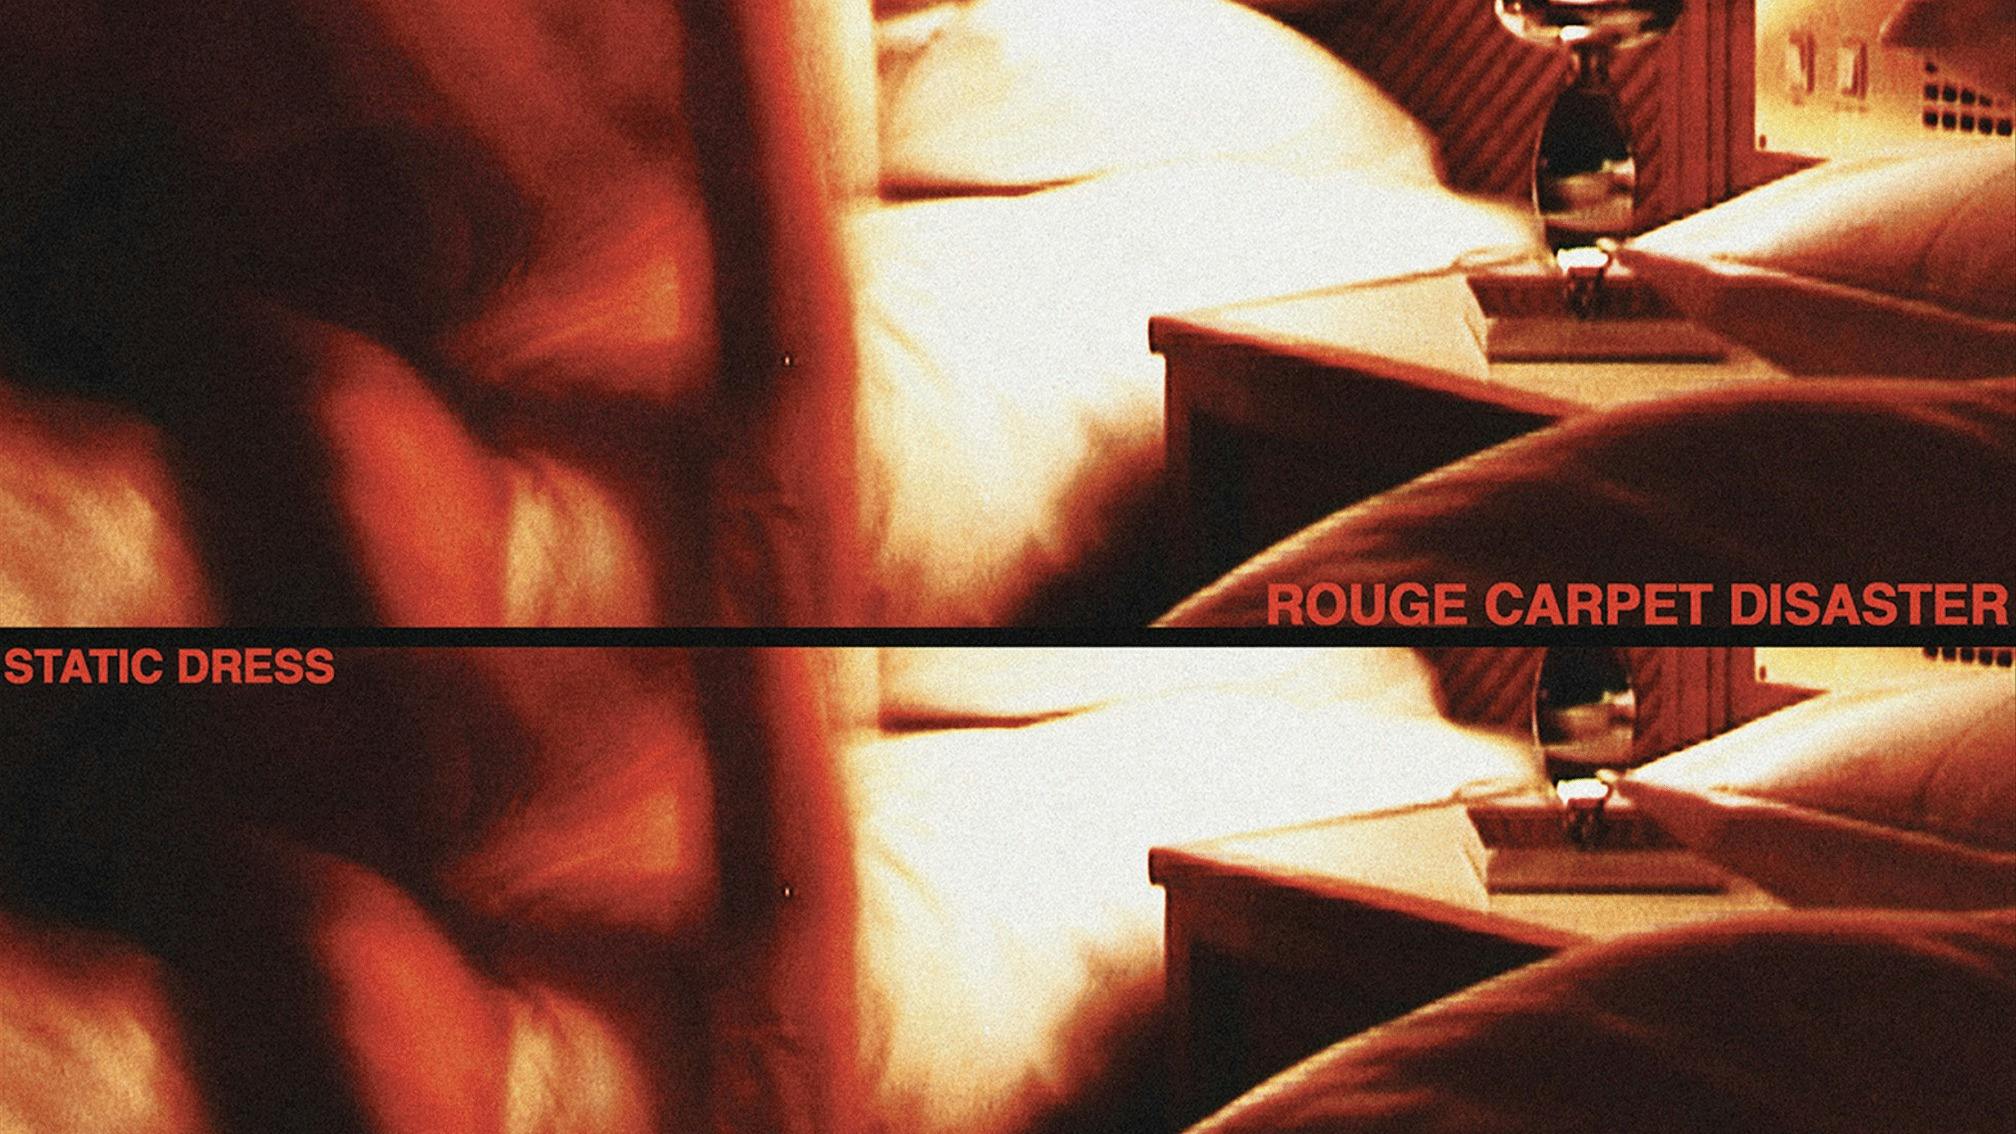 Album review: Static Dress – Rouge Carpet Disaster